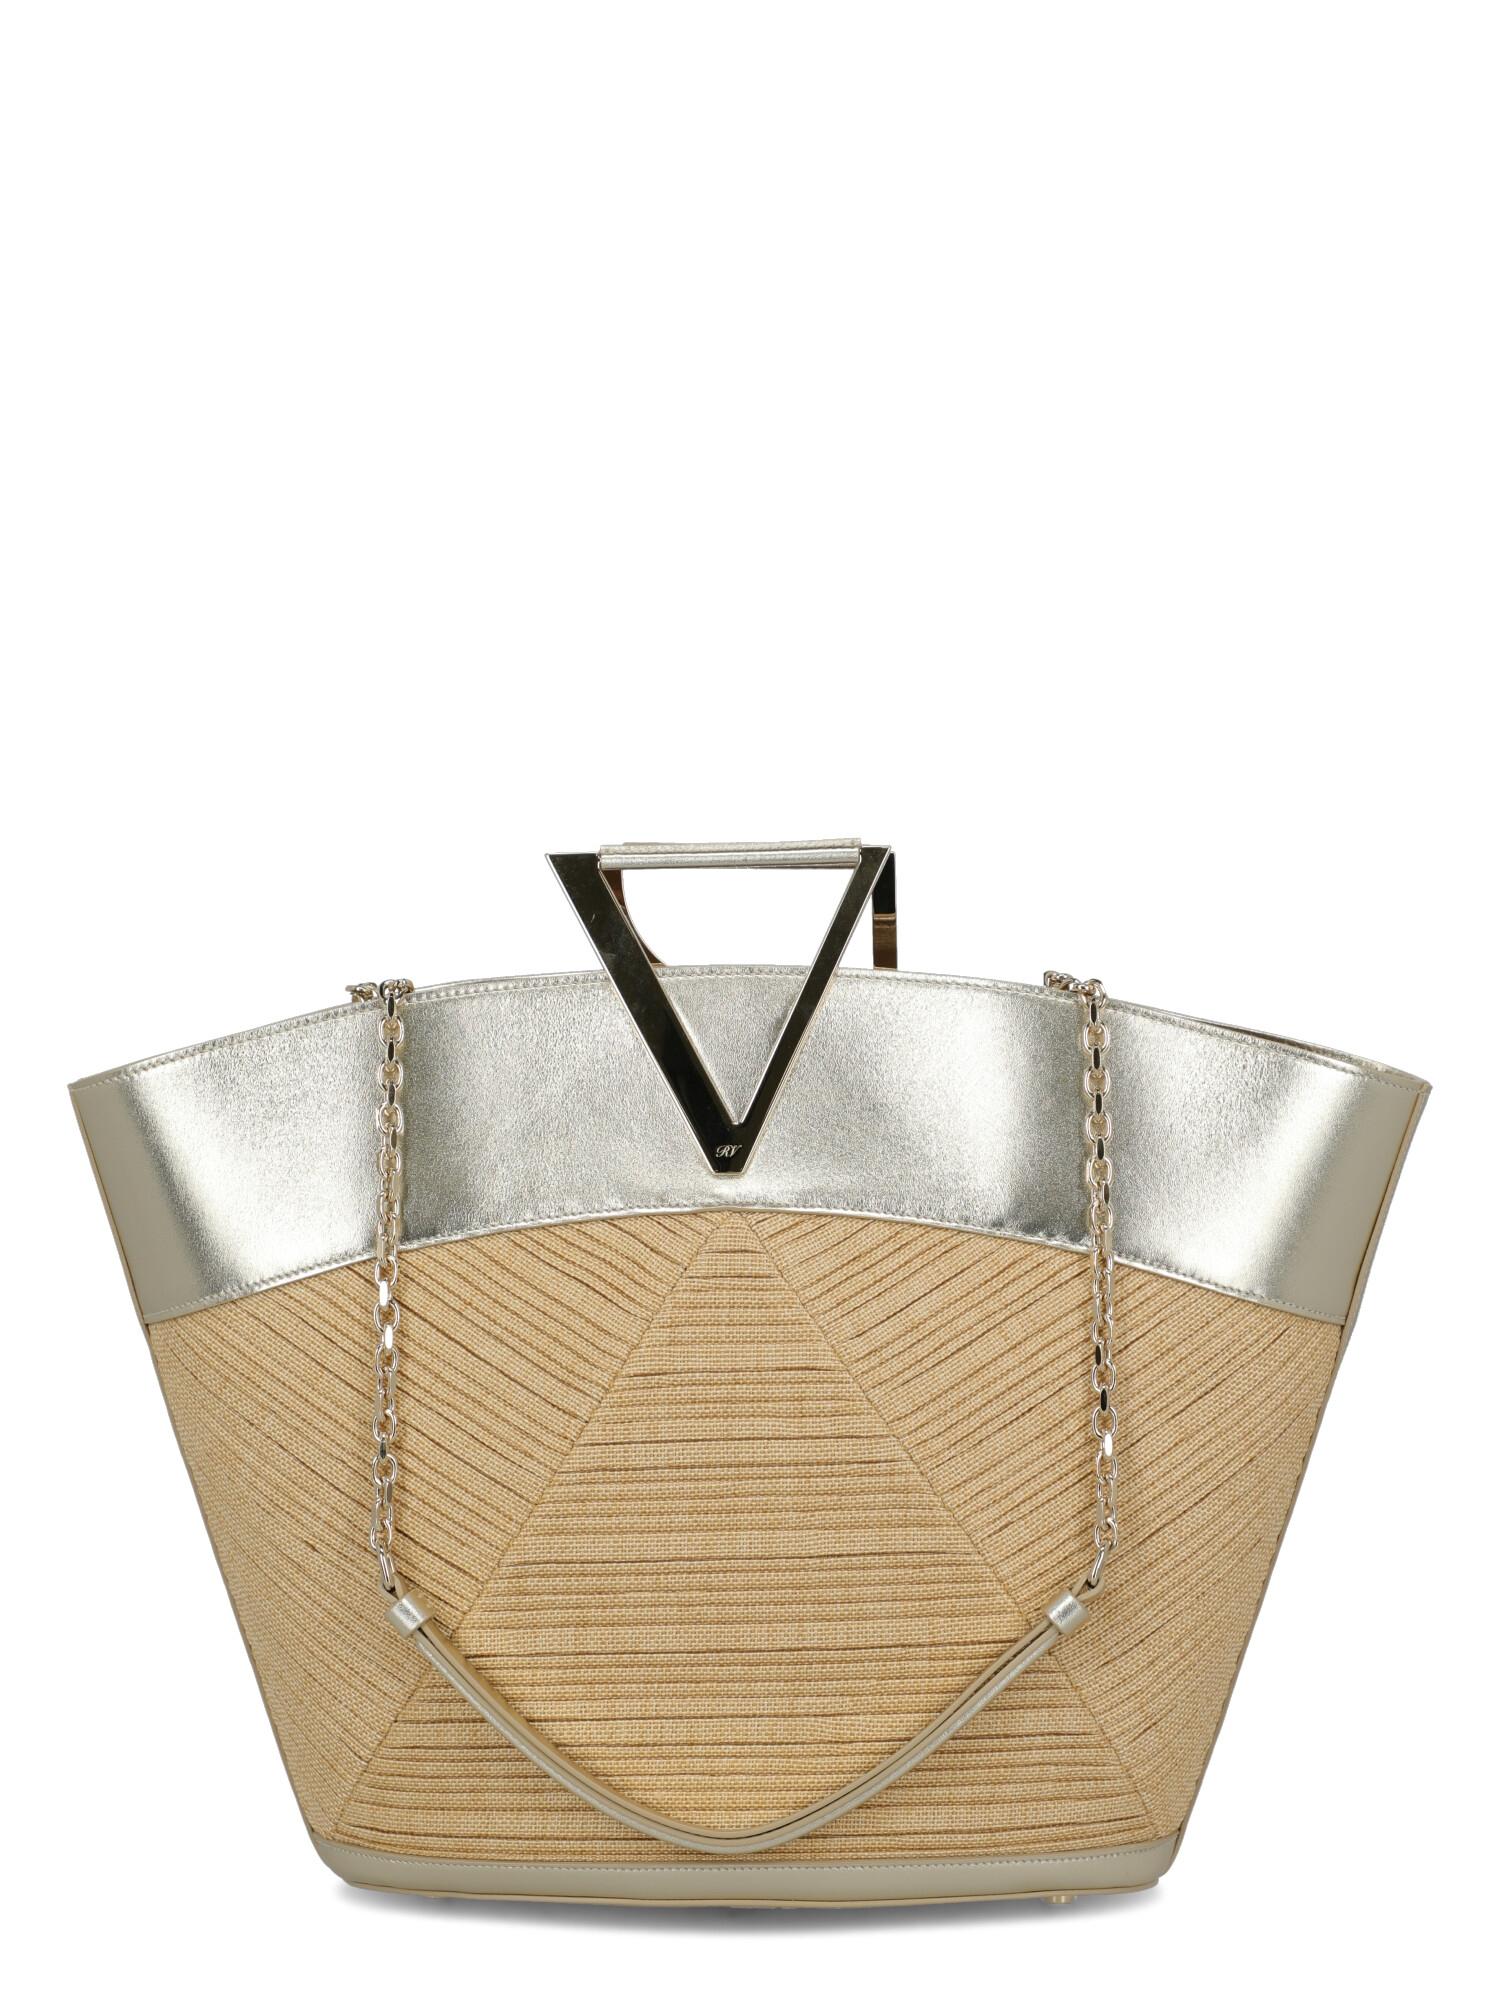 Roger Vivier Women's Handbags Beige/Gold Leather For Sale 1